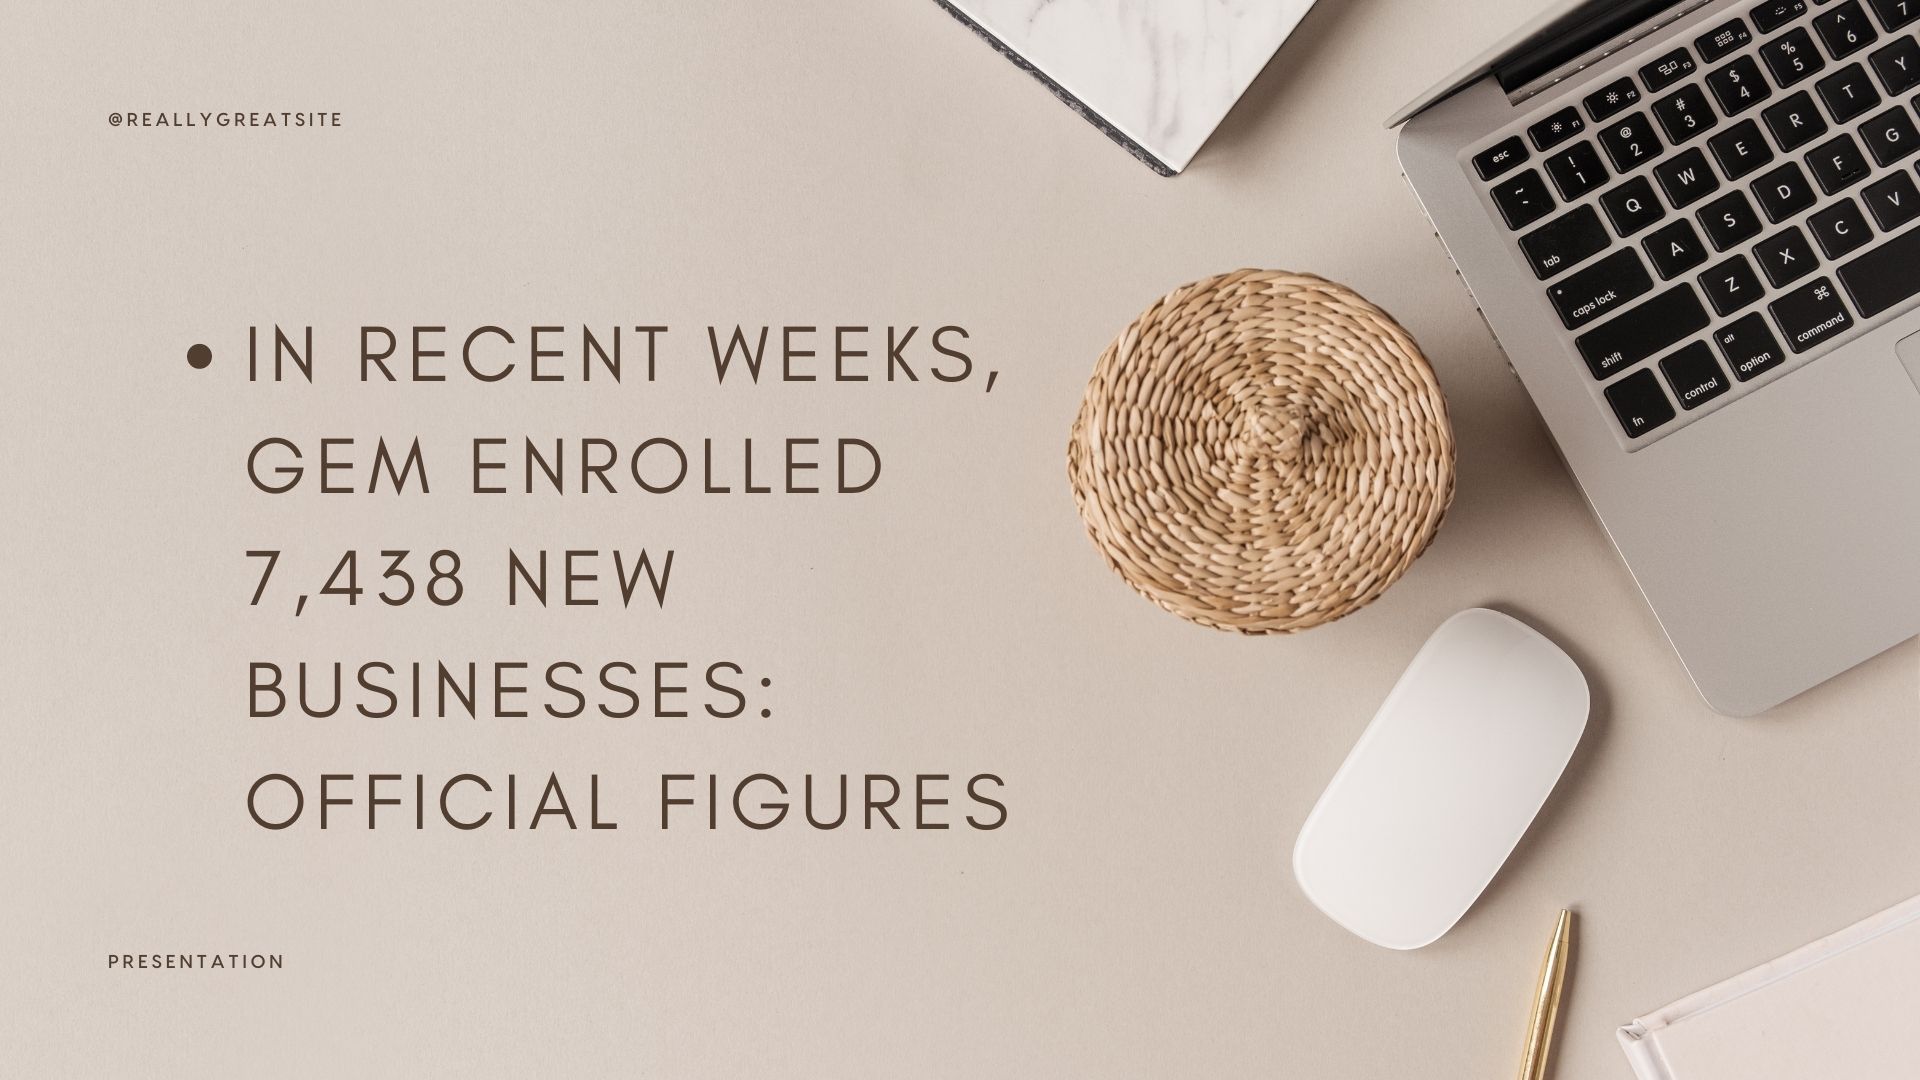 In recent weeks, GeM enrolled 7,438 new businesses official figures